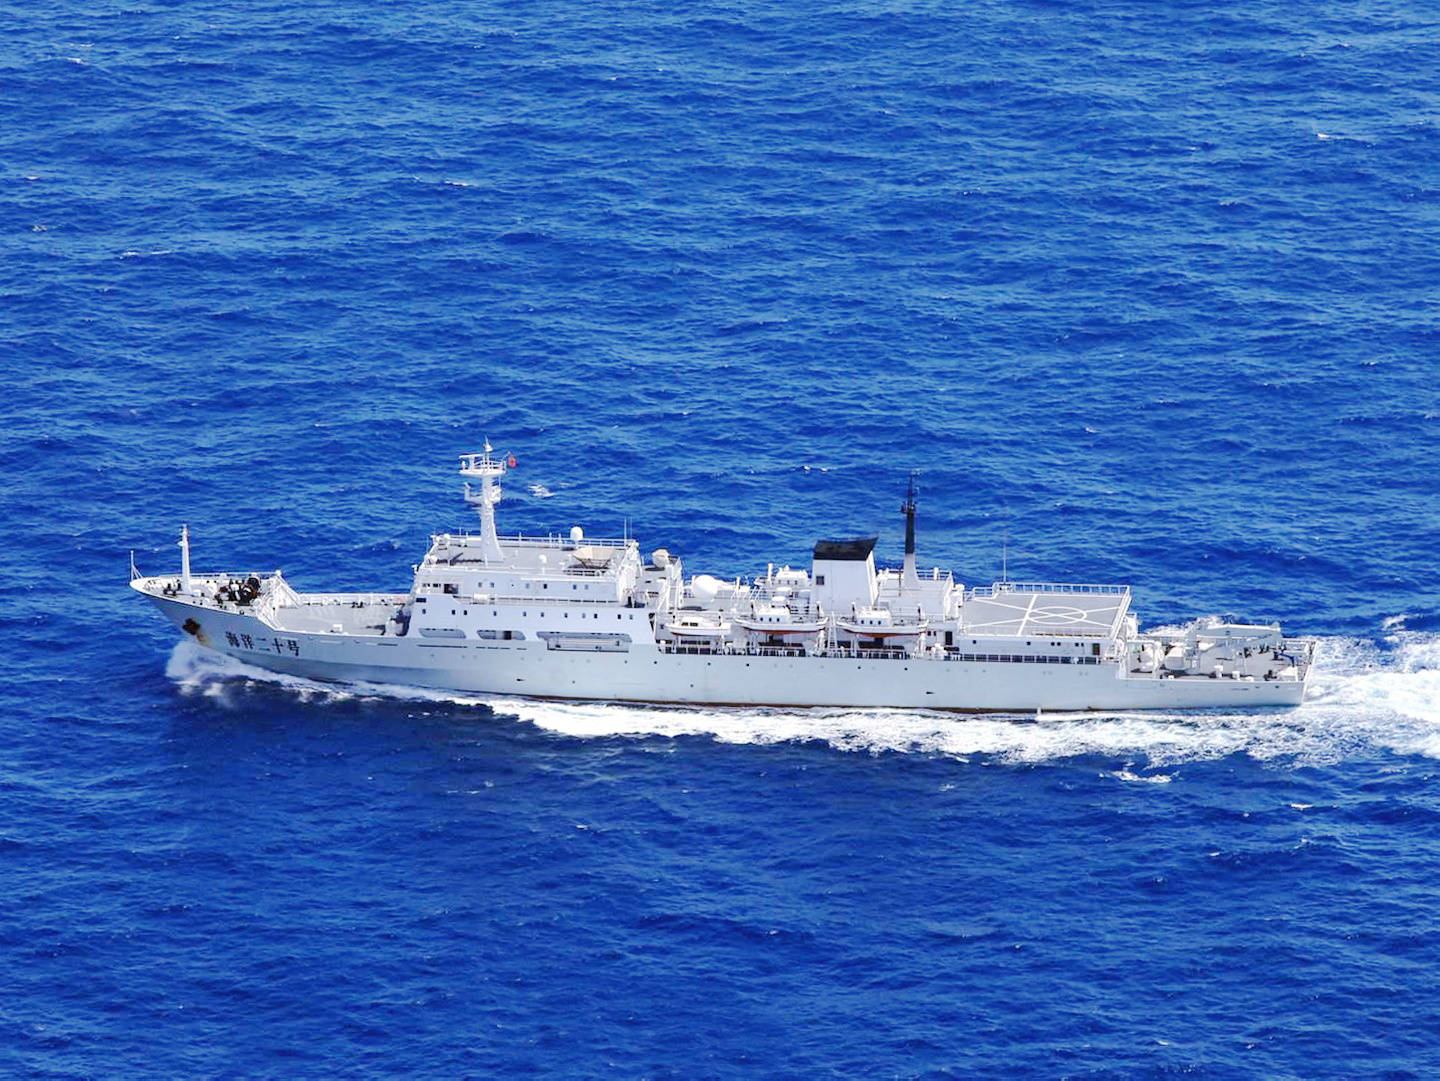 636a型海洋调查船驶向大西洋,北约后方或成中国核潜艇透明战场